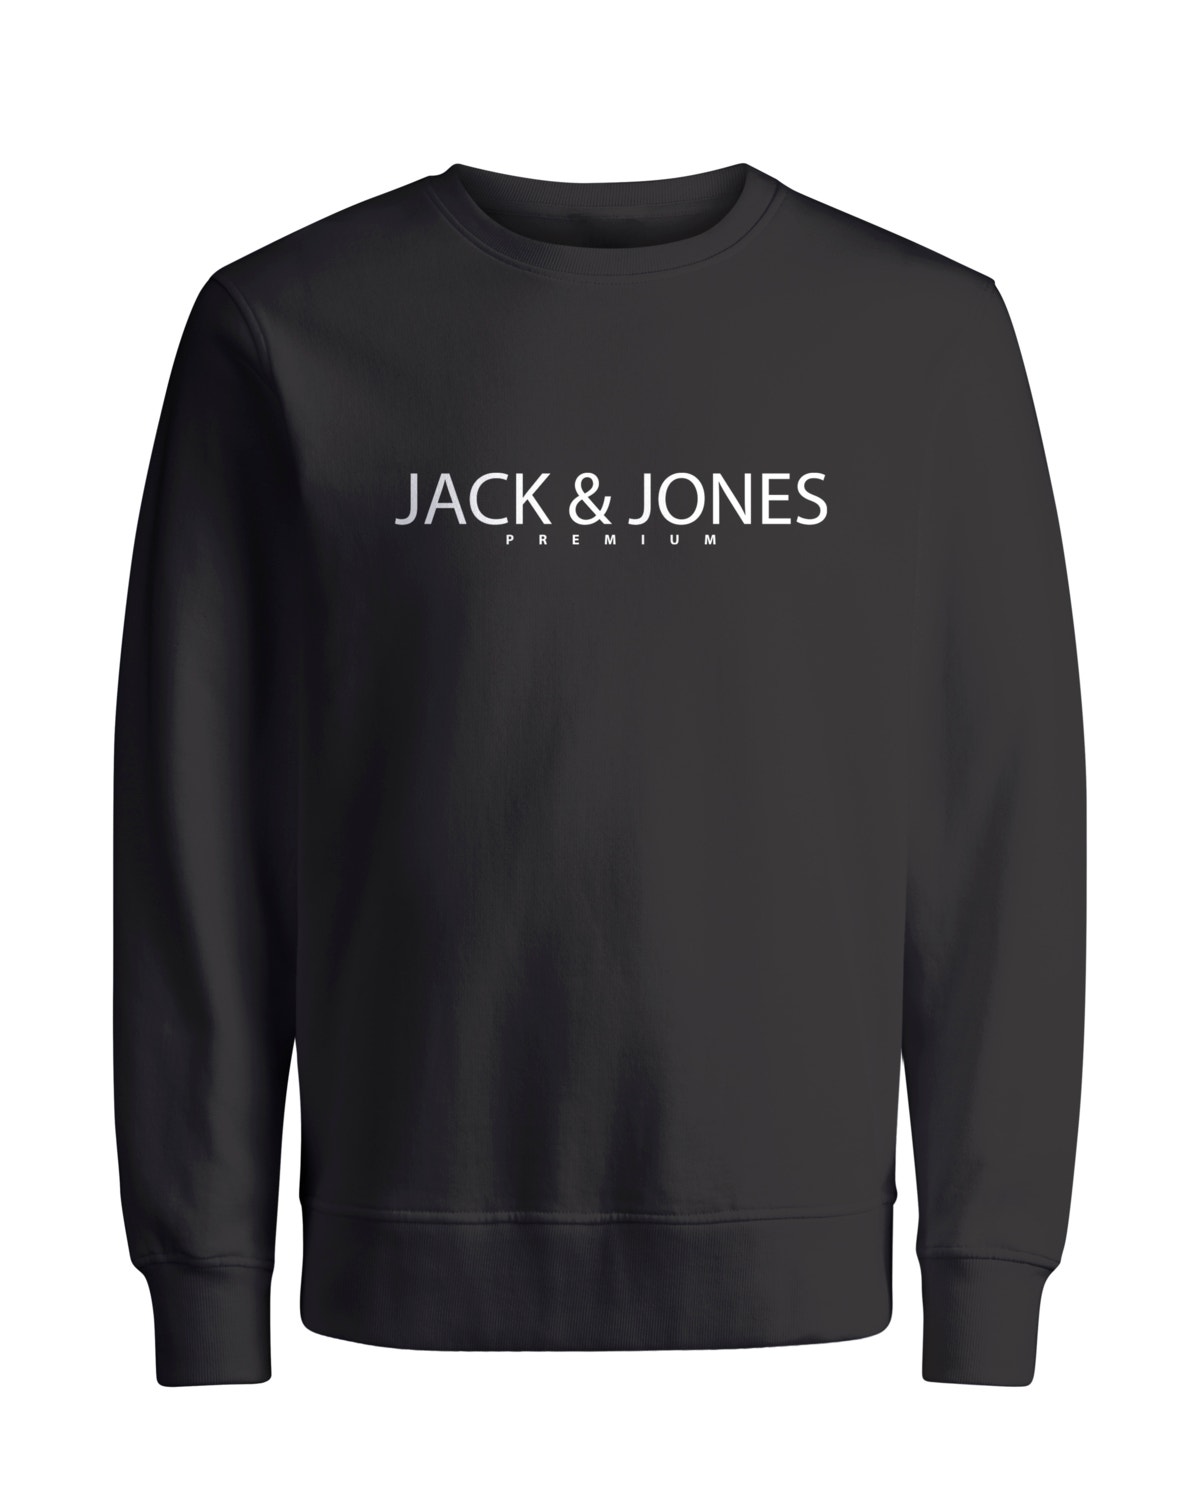 Jack & Jones Printed Crew neck Sweatshirt -Black Onyx - 12256972